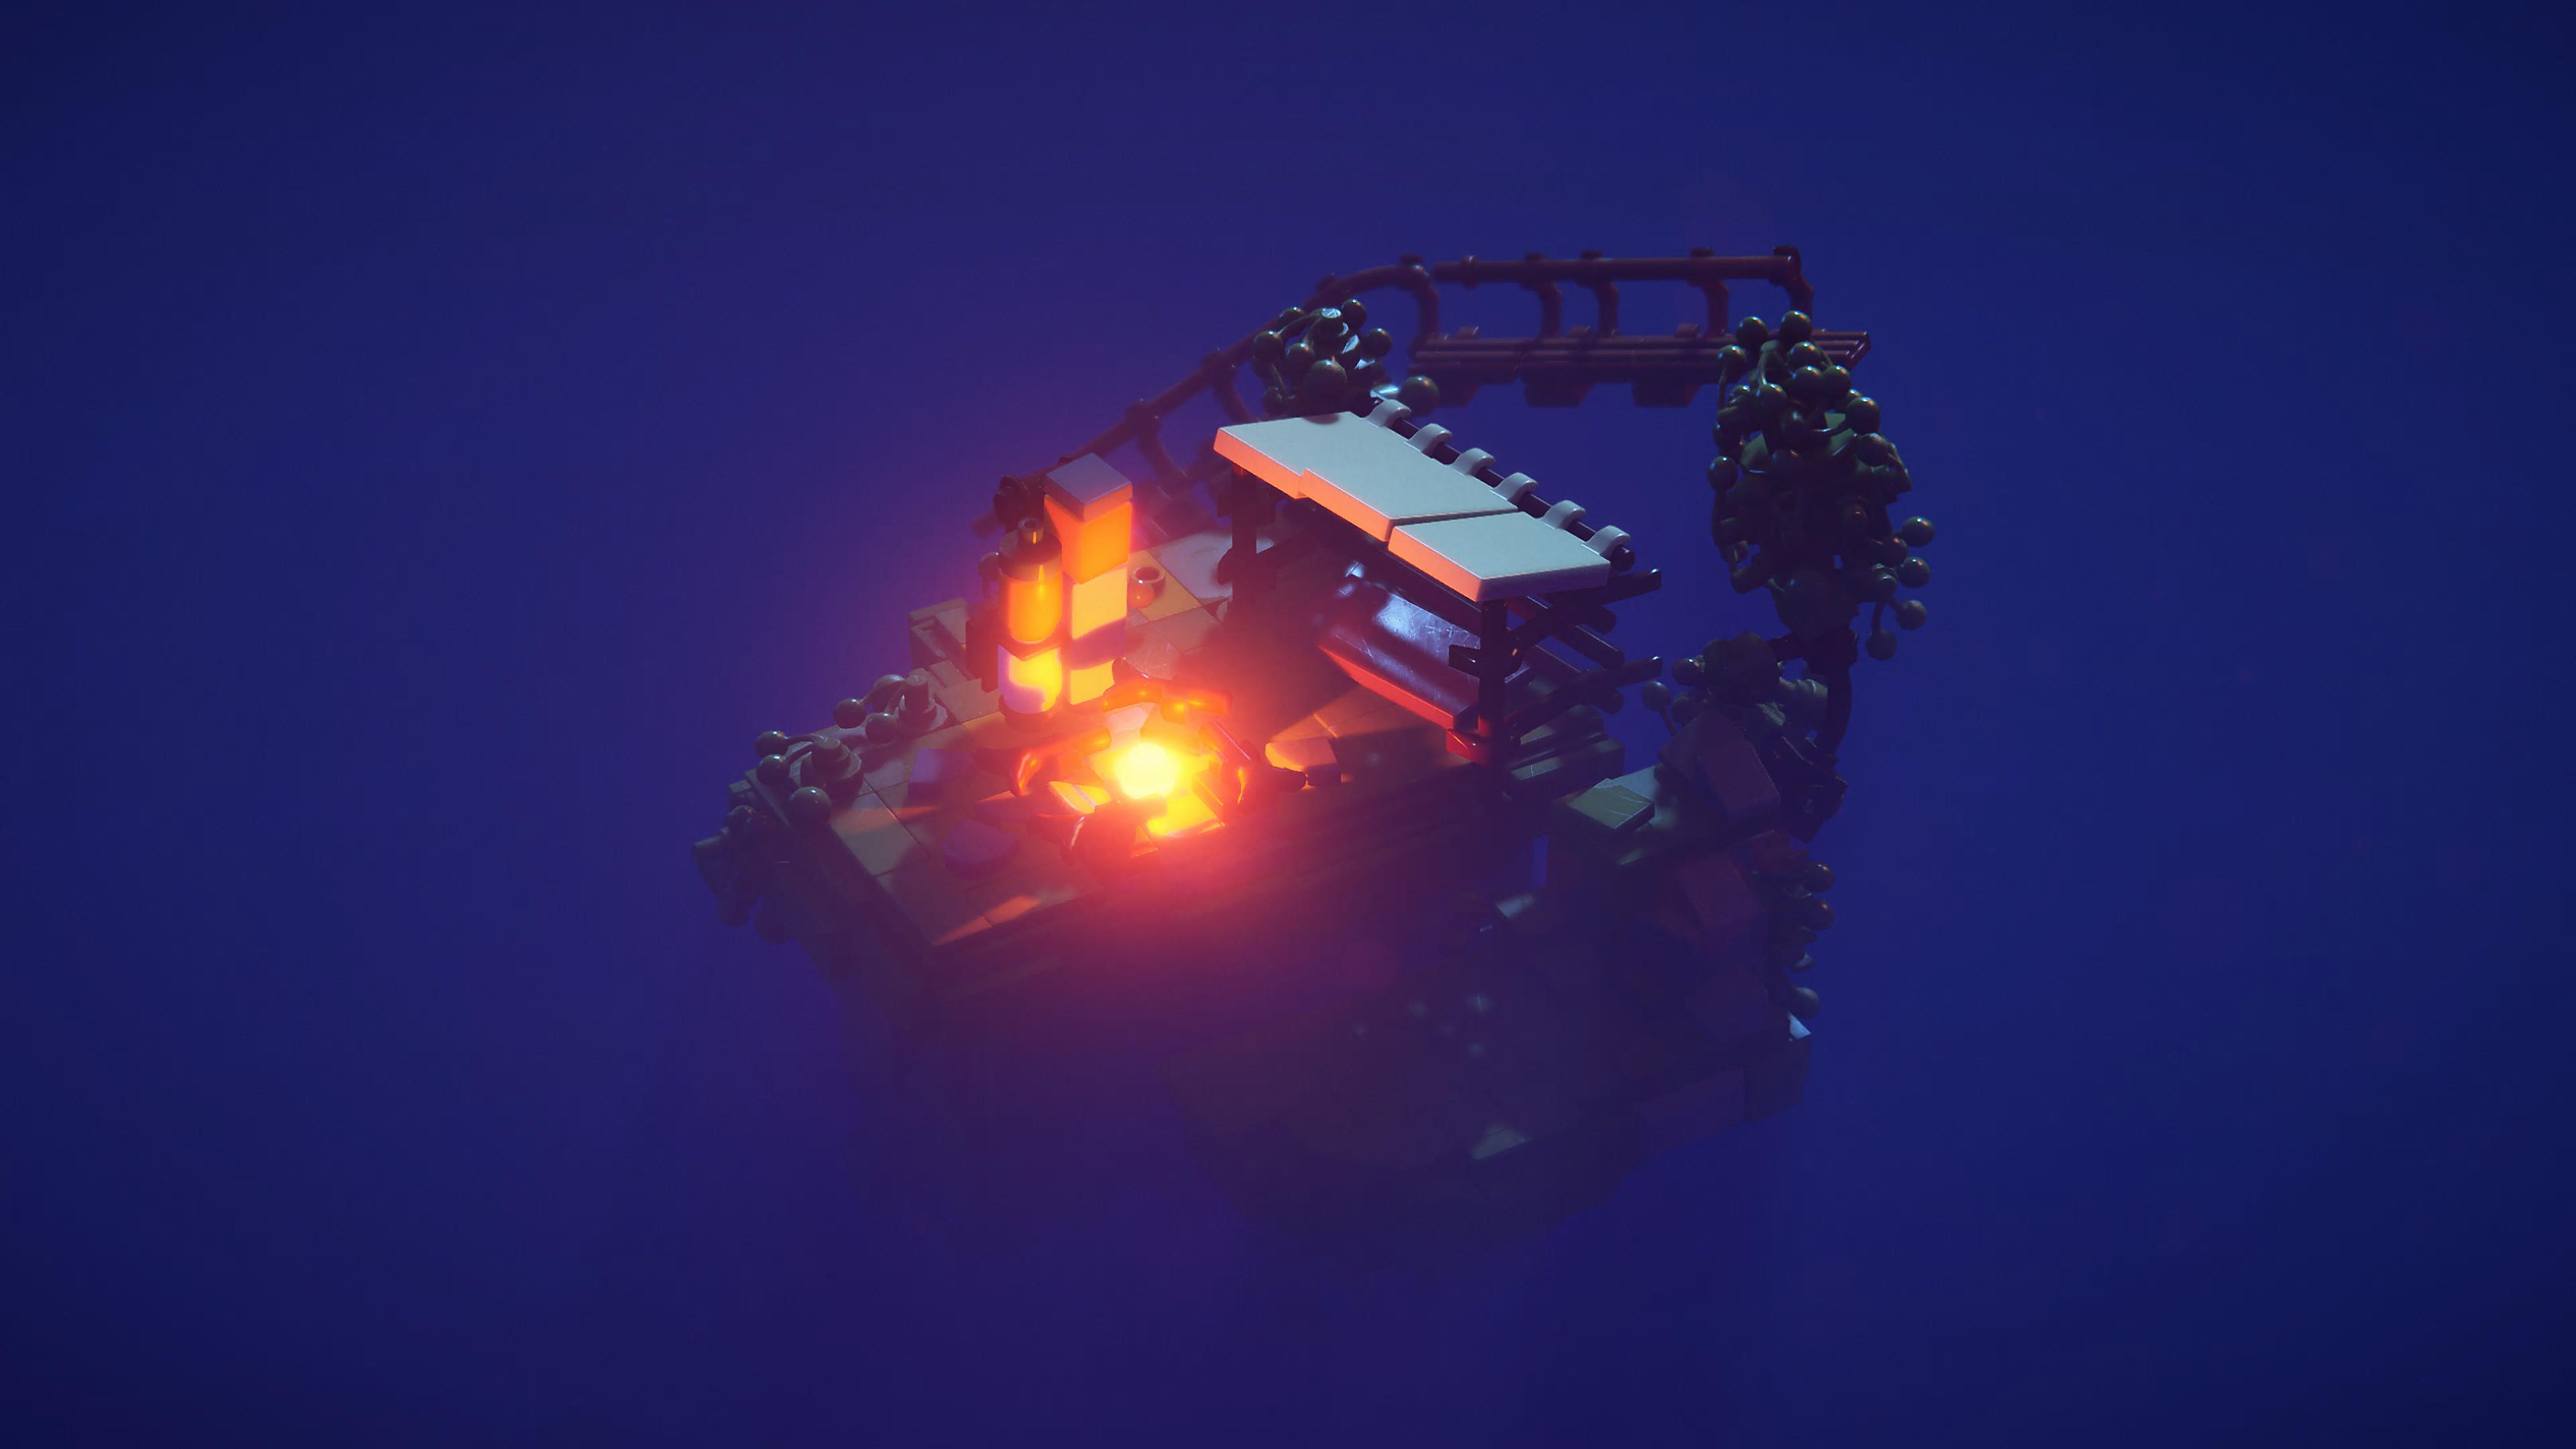 Captura de pantalla de LEGO Builder's Journey mostrando una escena LEGO